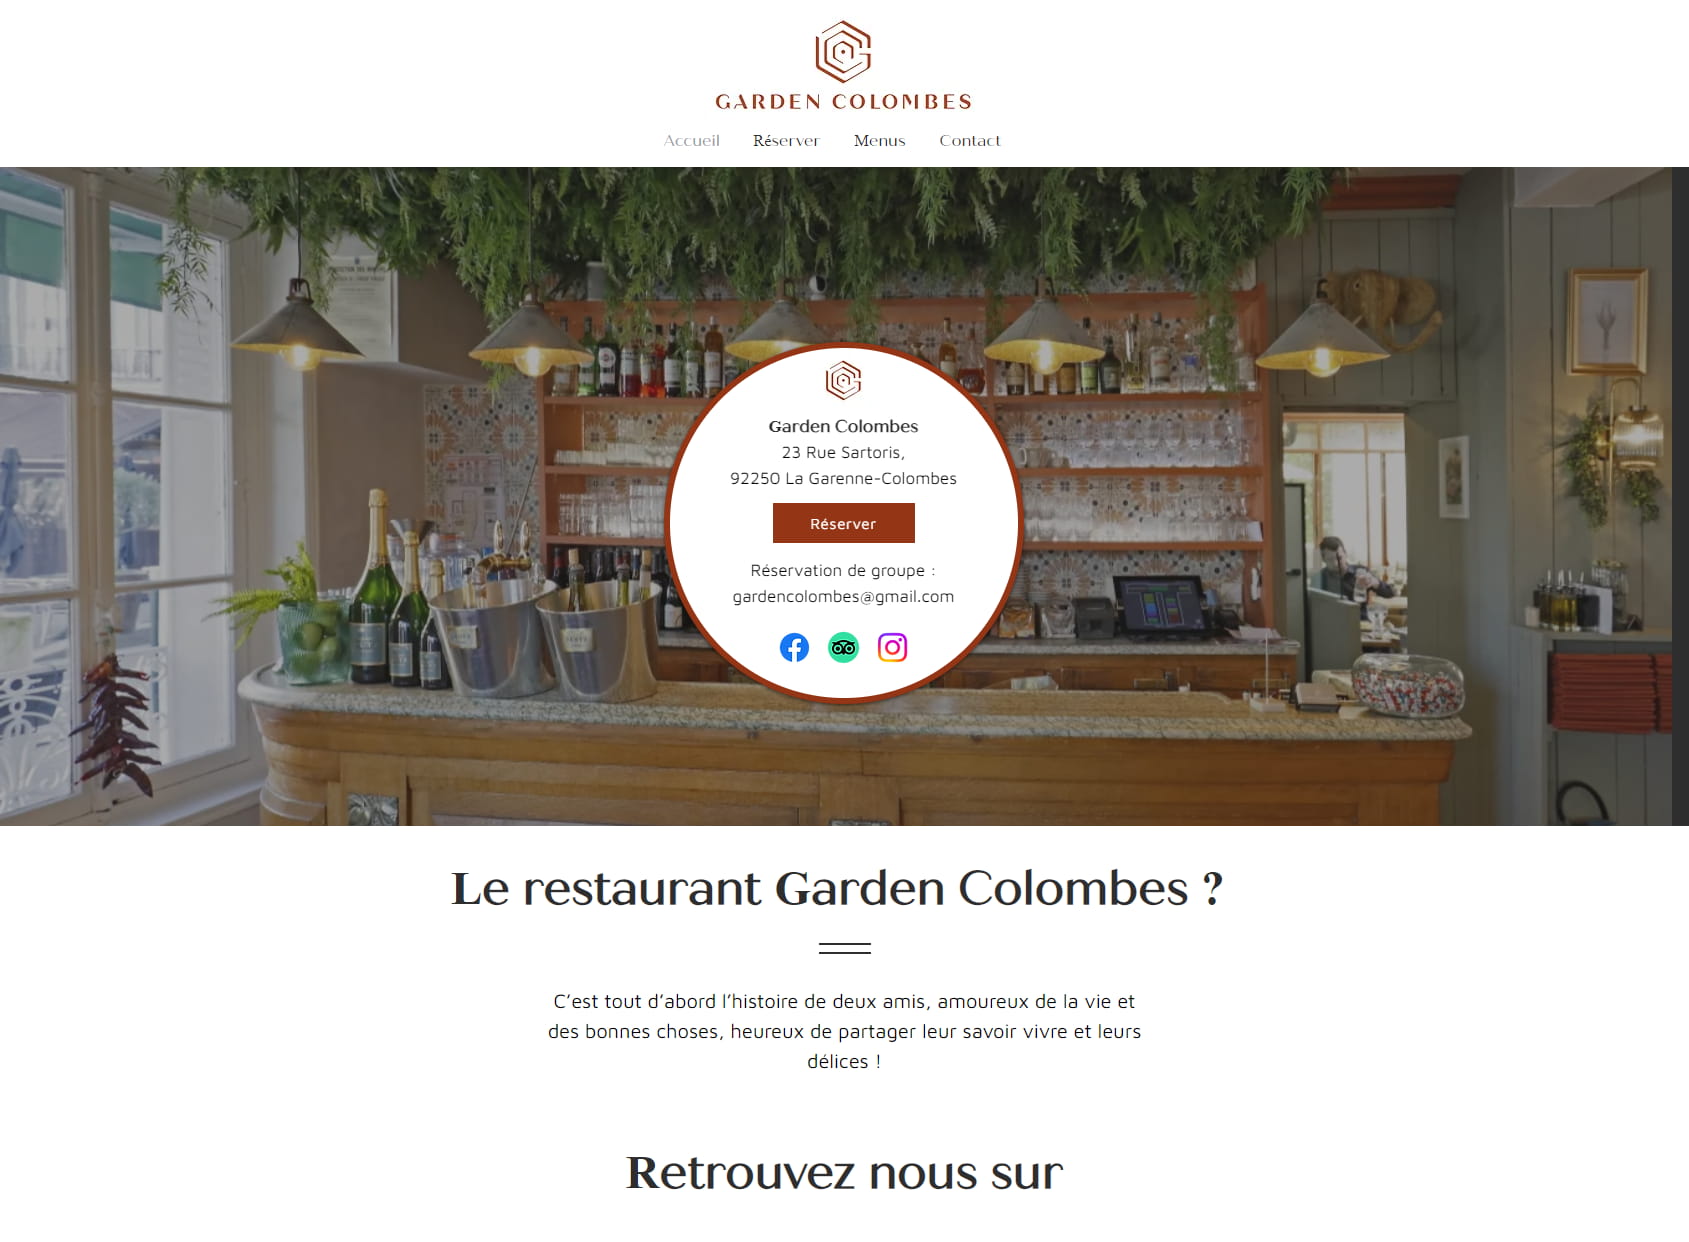 Garden Colombes